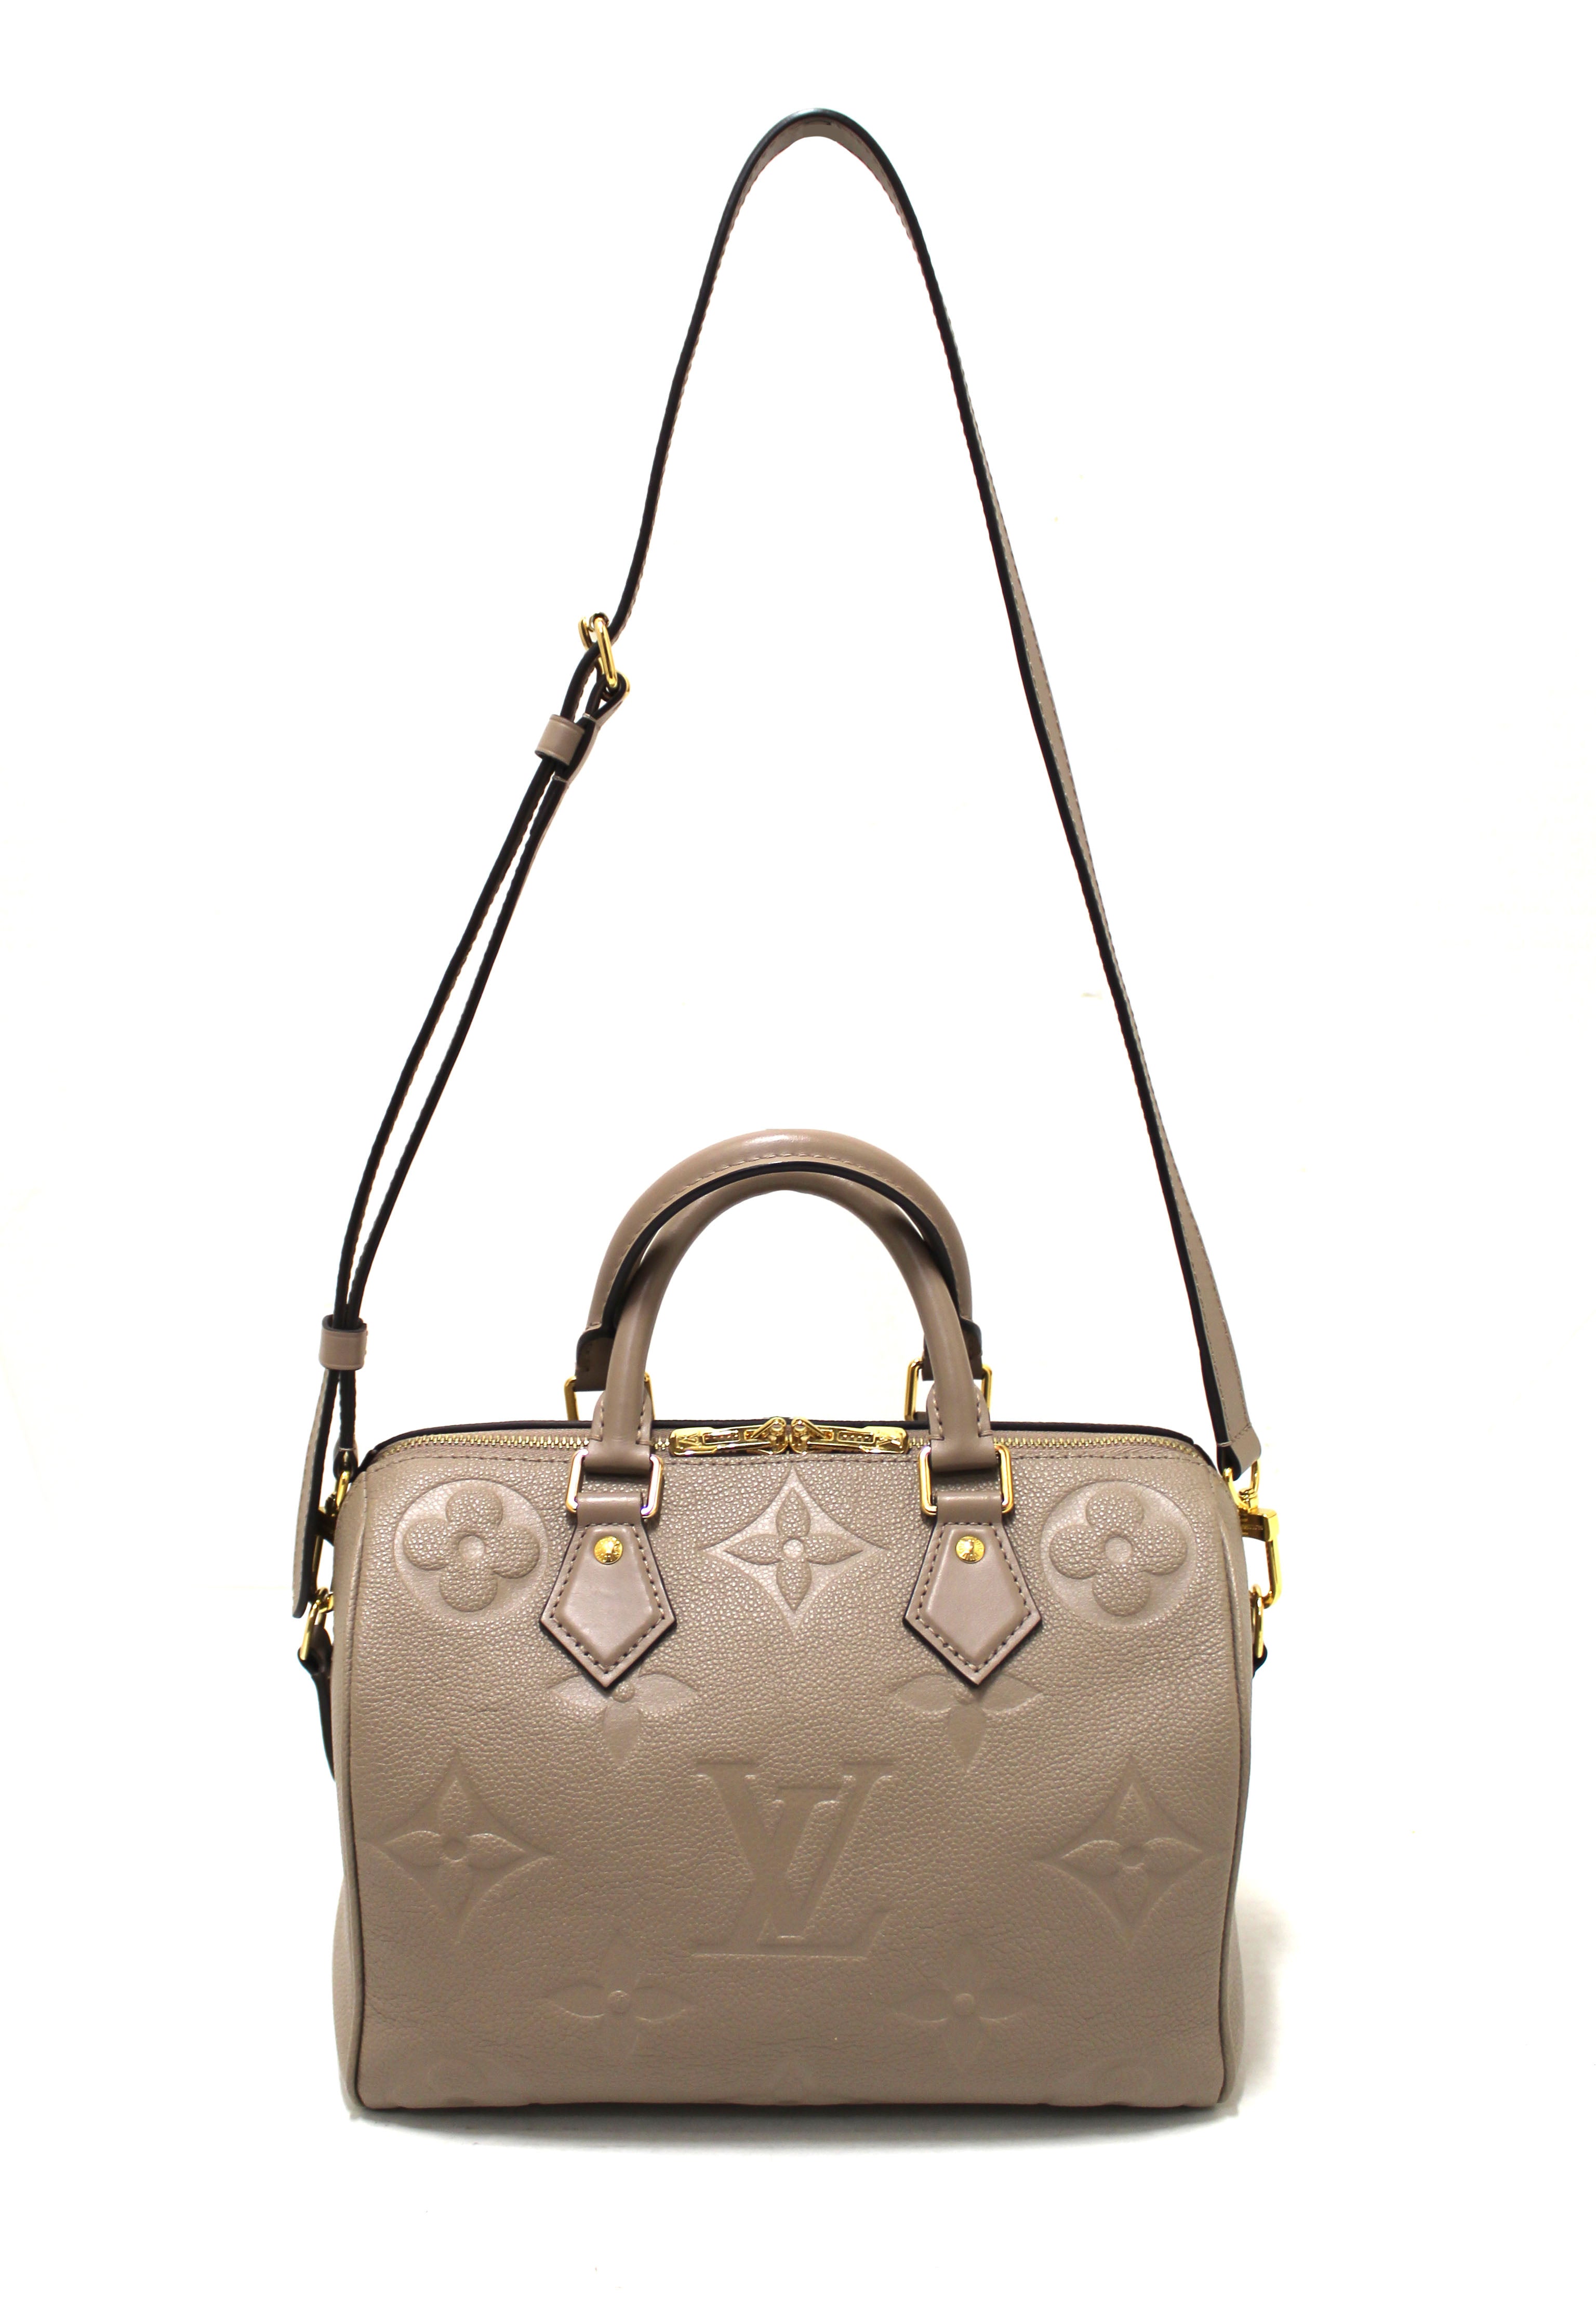 Louis Vuitton Speedy 25 Handbag